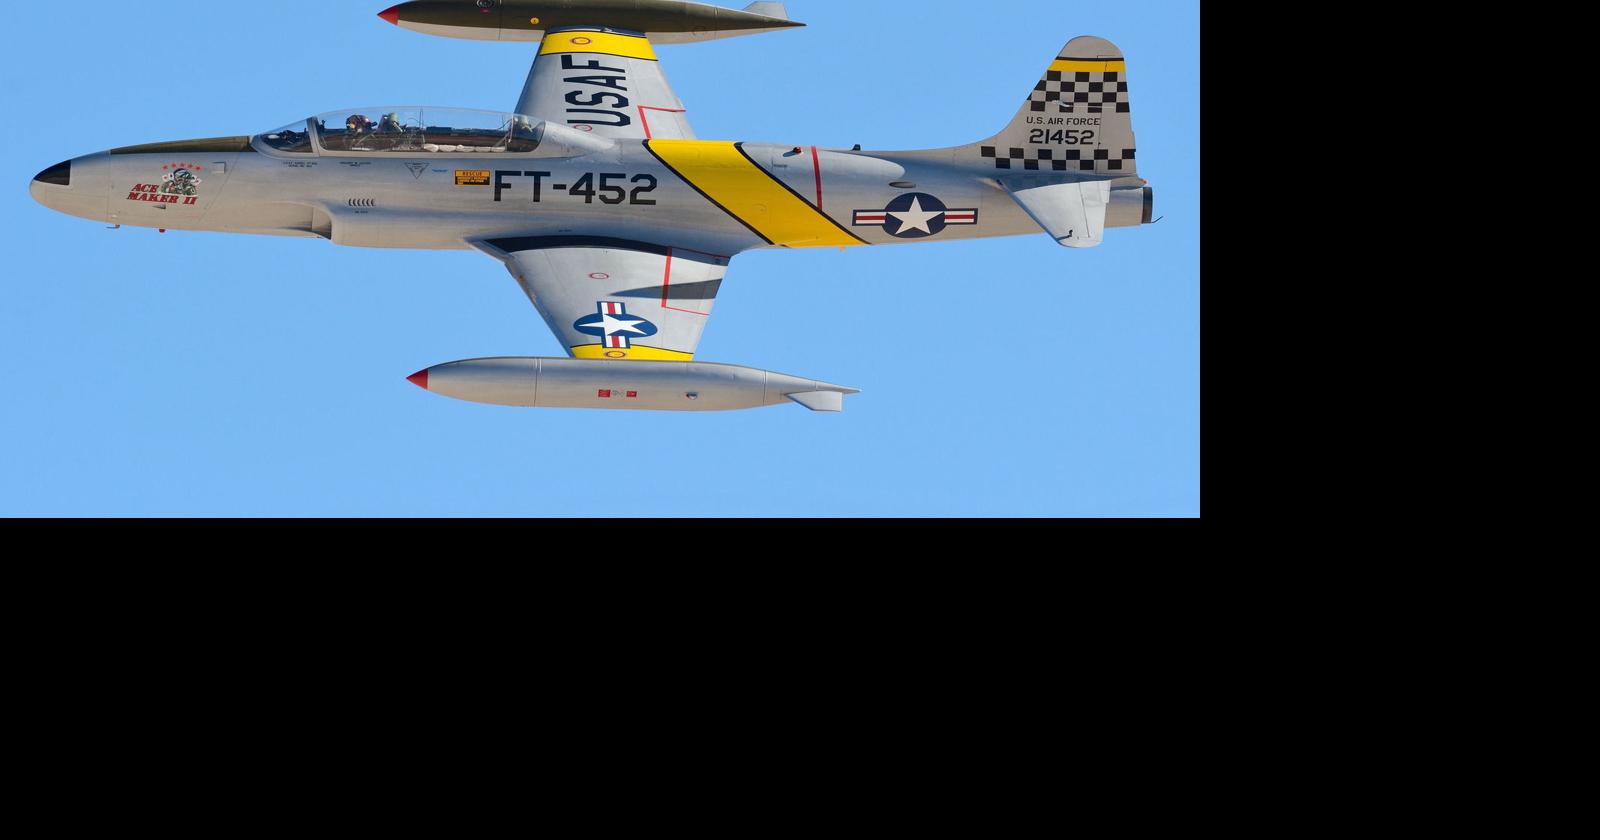 Lockheed T-33 Ace Maker II - Plane & Pilot Magazine